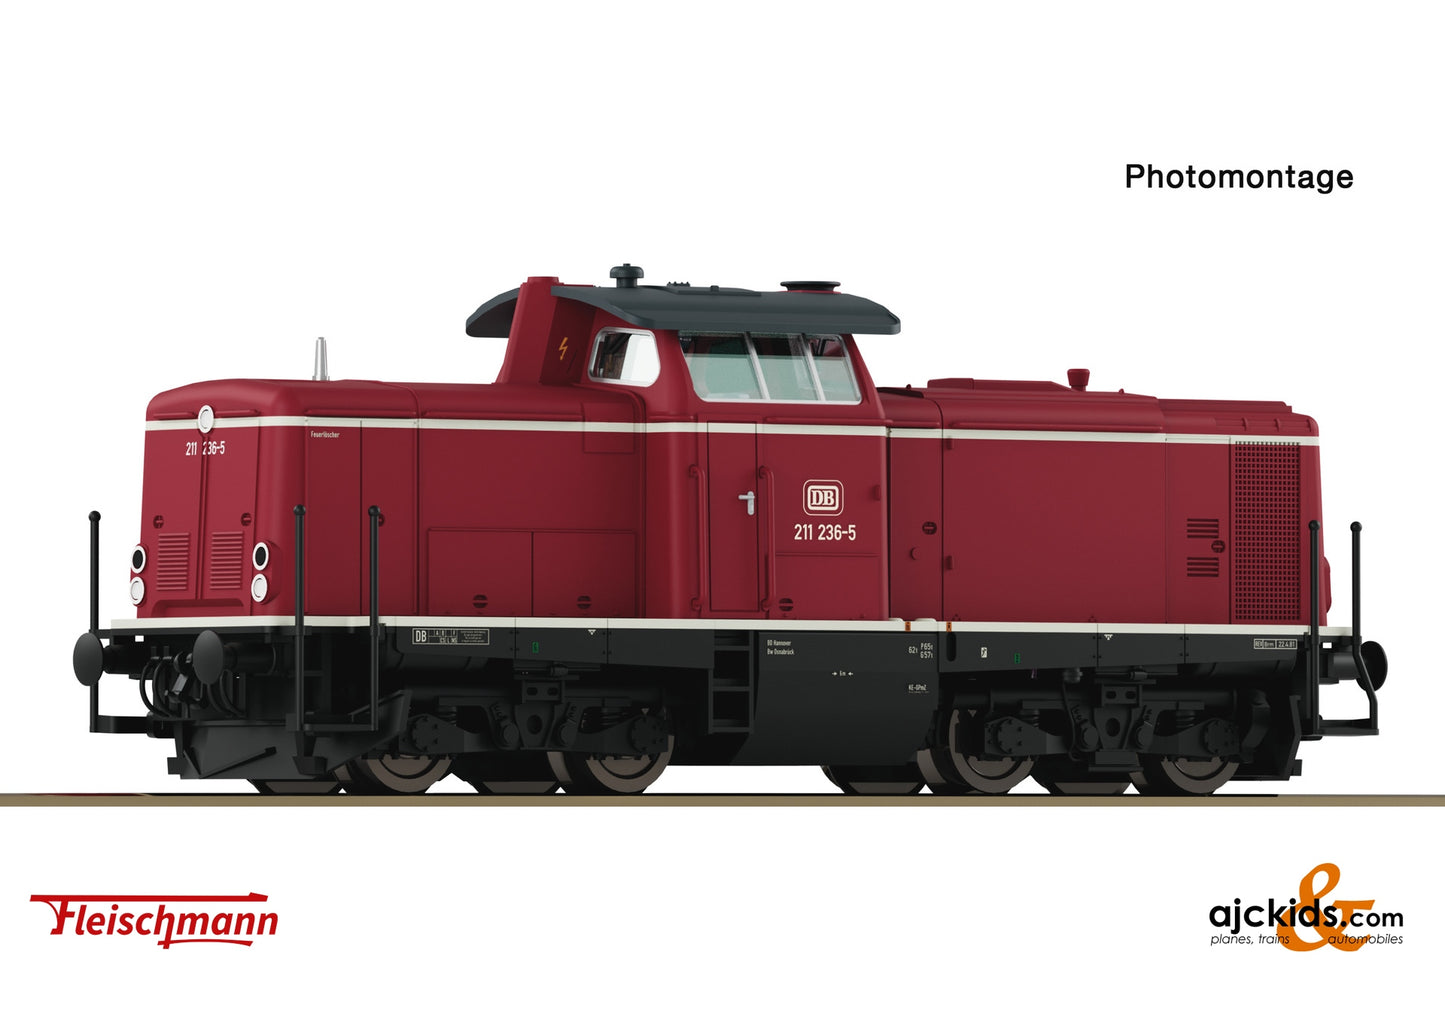 Fleischmann 721210 - Diesel locomotive class 211, DB at Ajckids.com